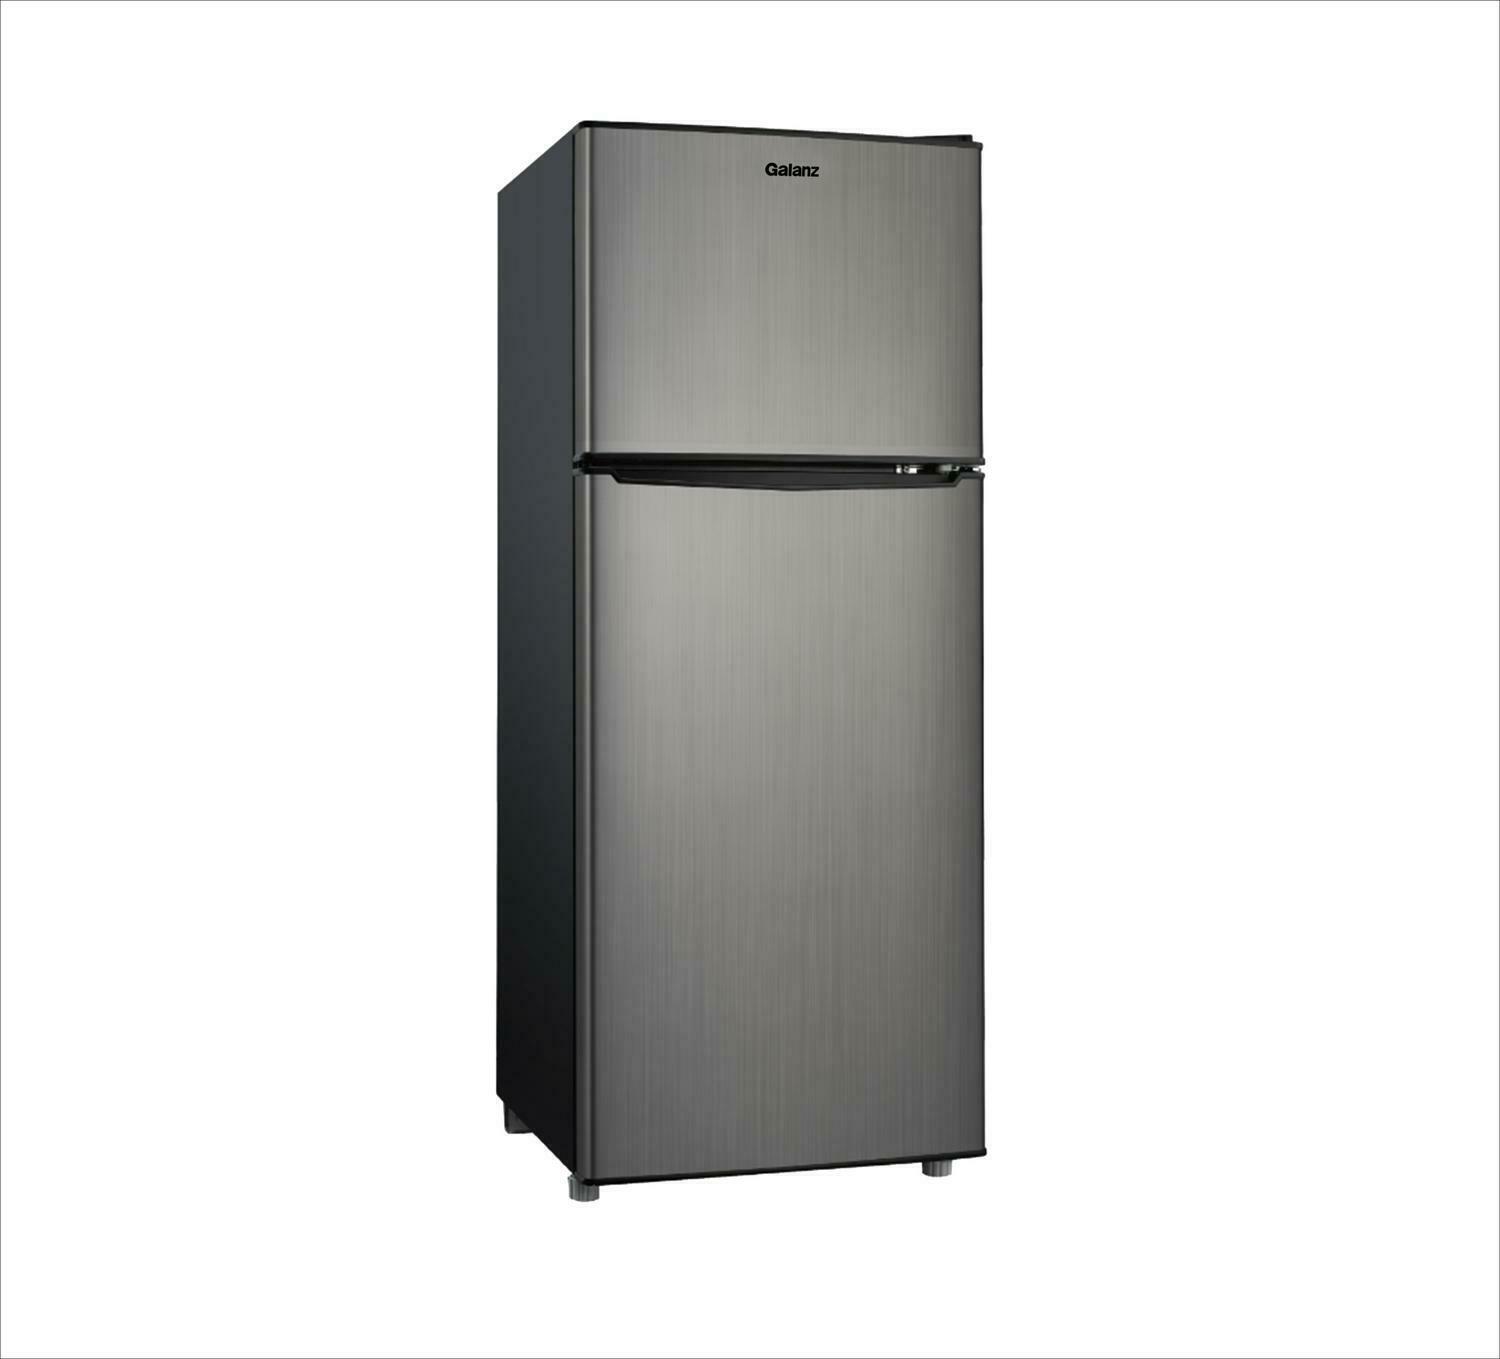 MINI FRIDGE With FREEZER 4.6 CU FT Refrigerator Two Door Compact Stainless Steel